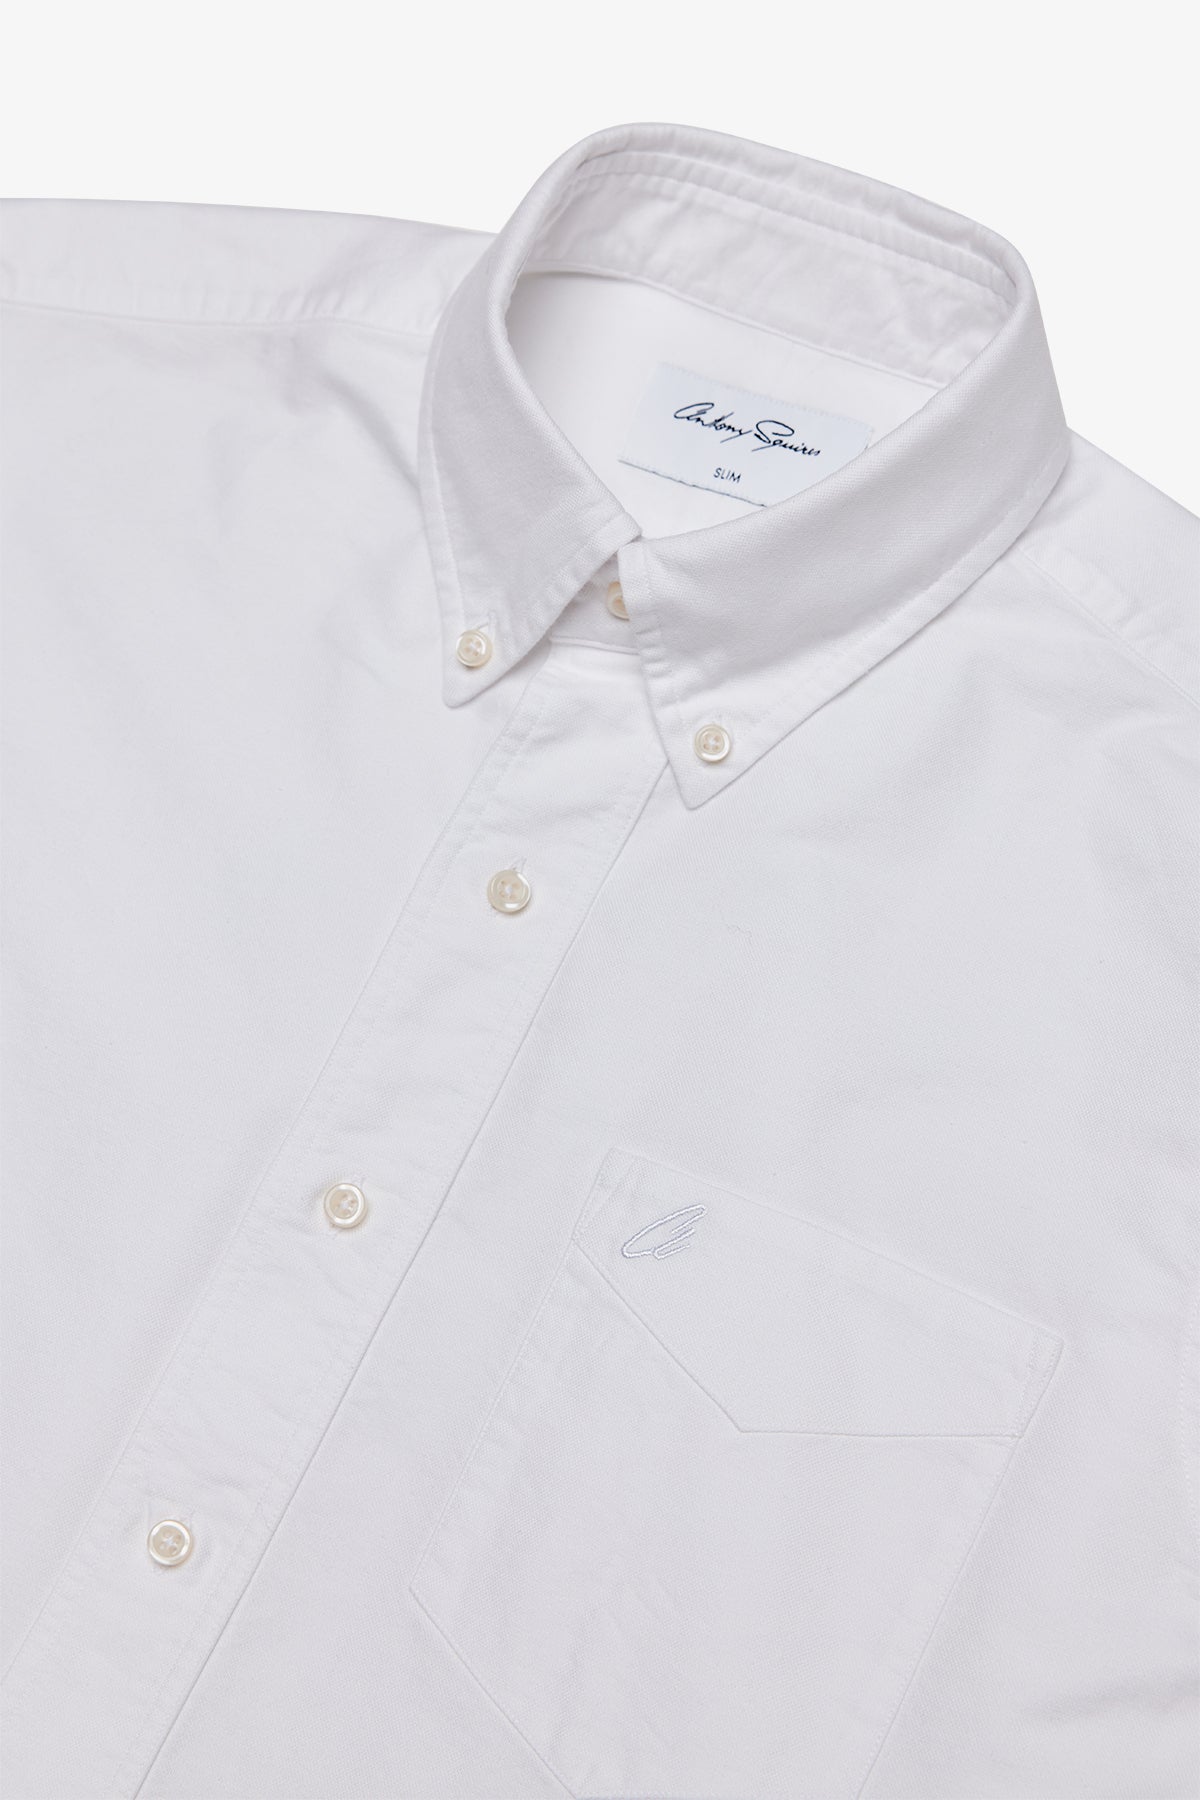 Crispin - White Casual Shirt